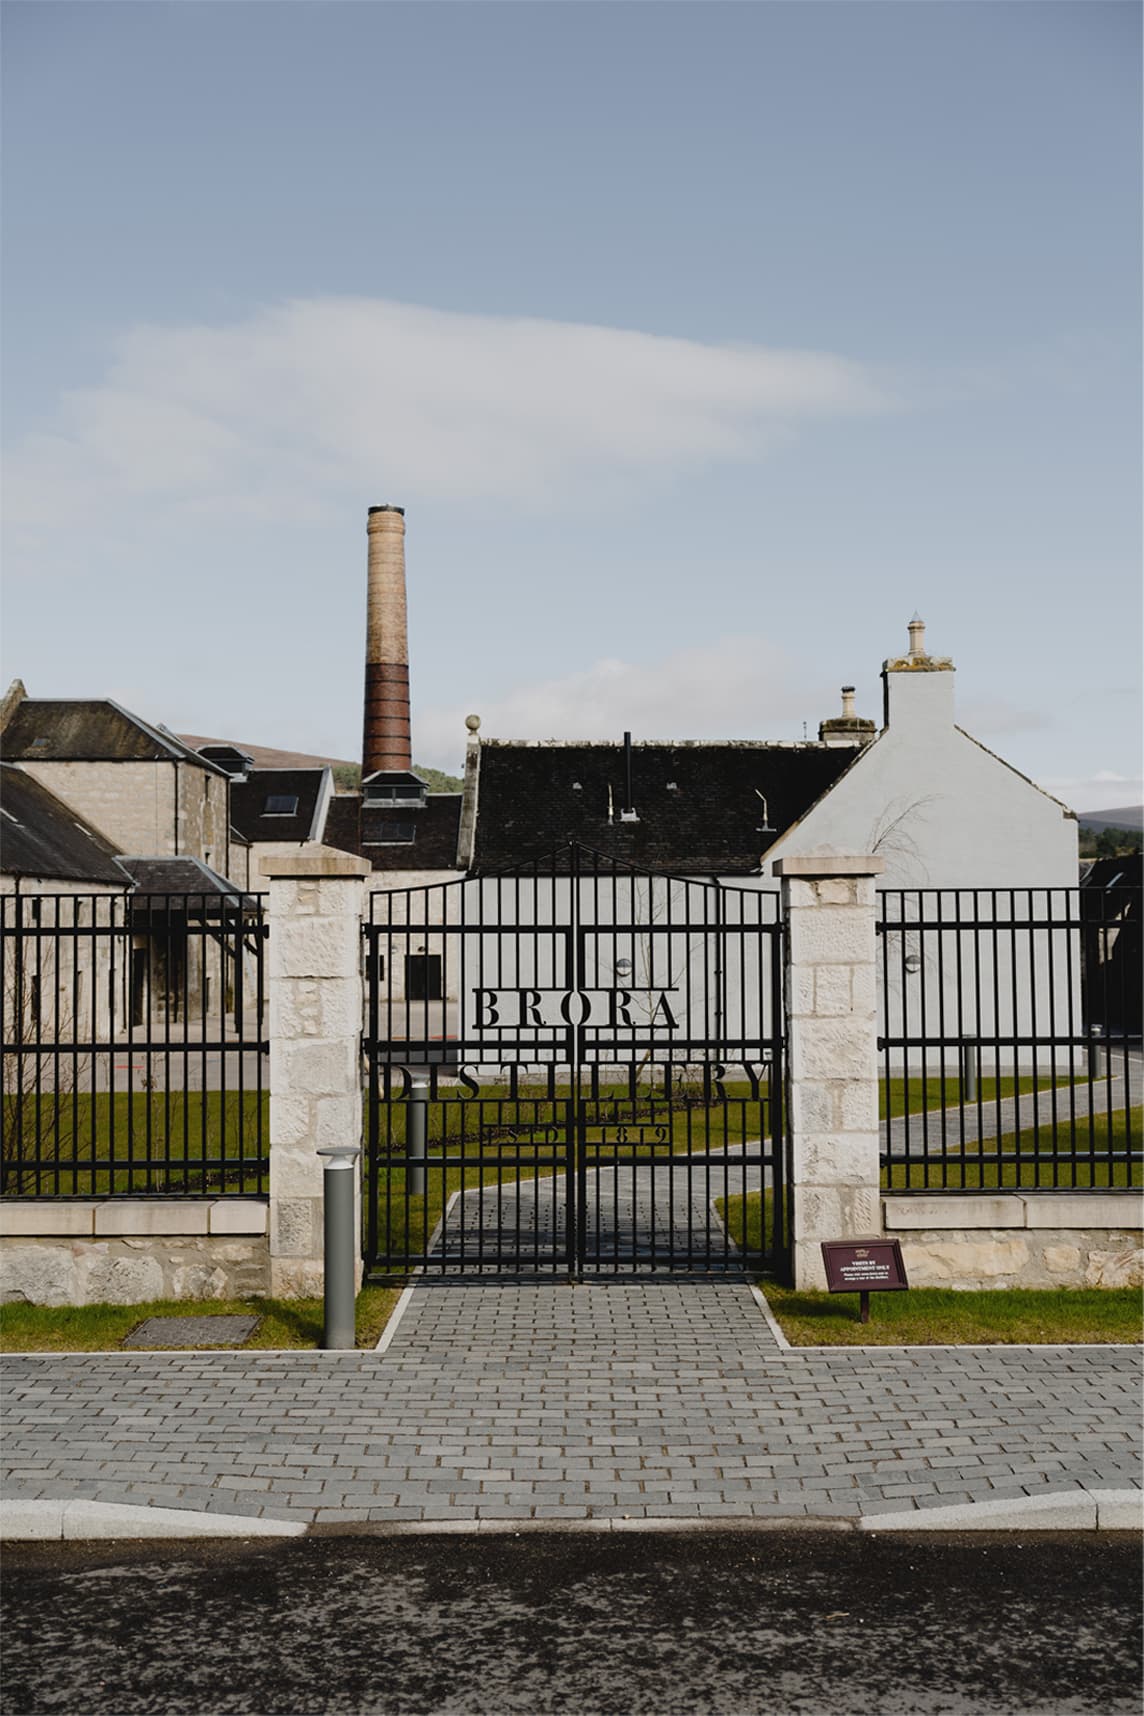 The Brora Distillery entrance in Scotland